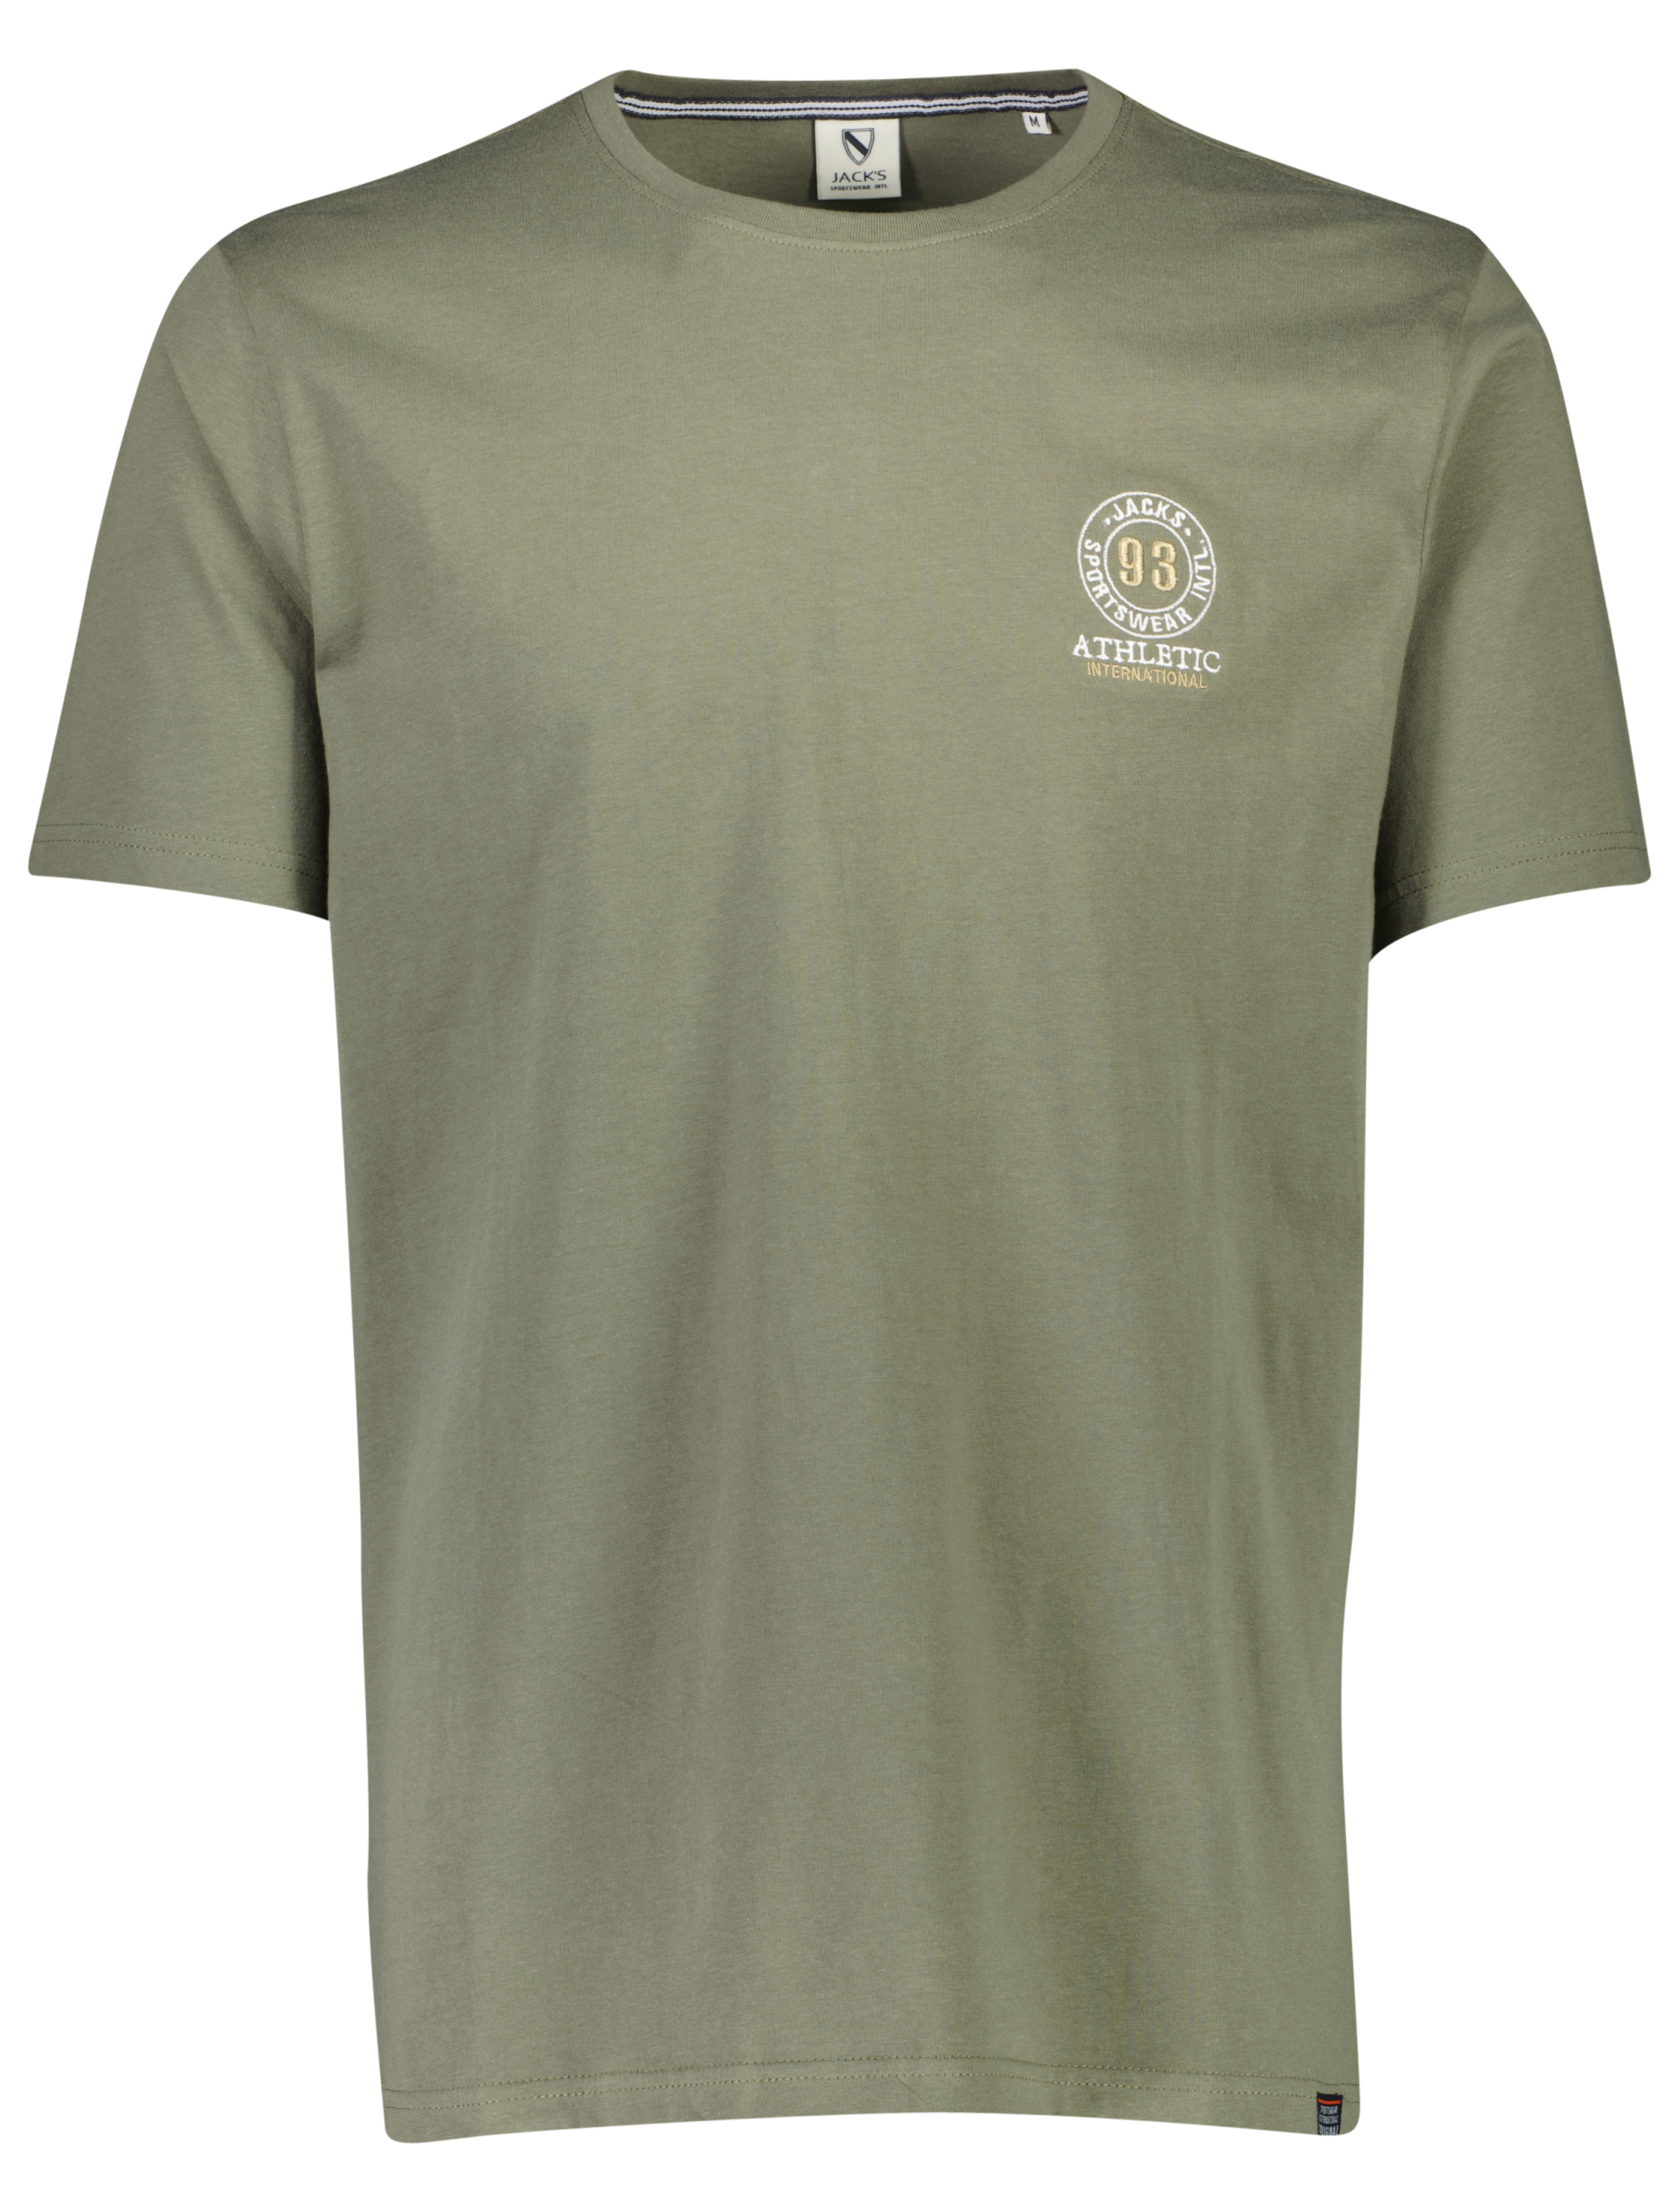 Jack's T-shirt grön / lt army